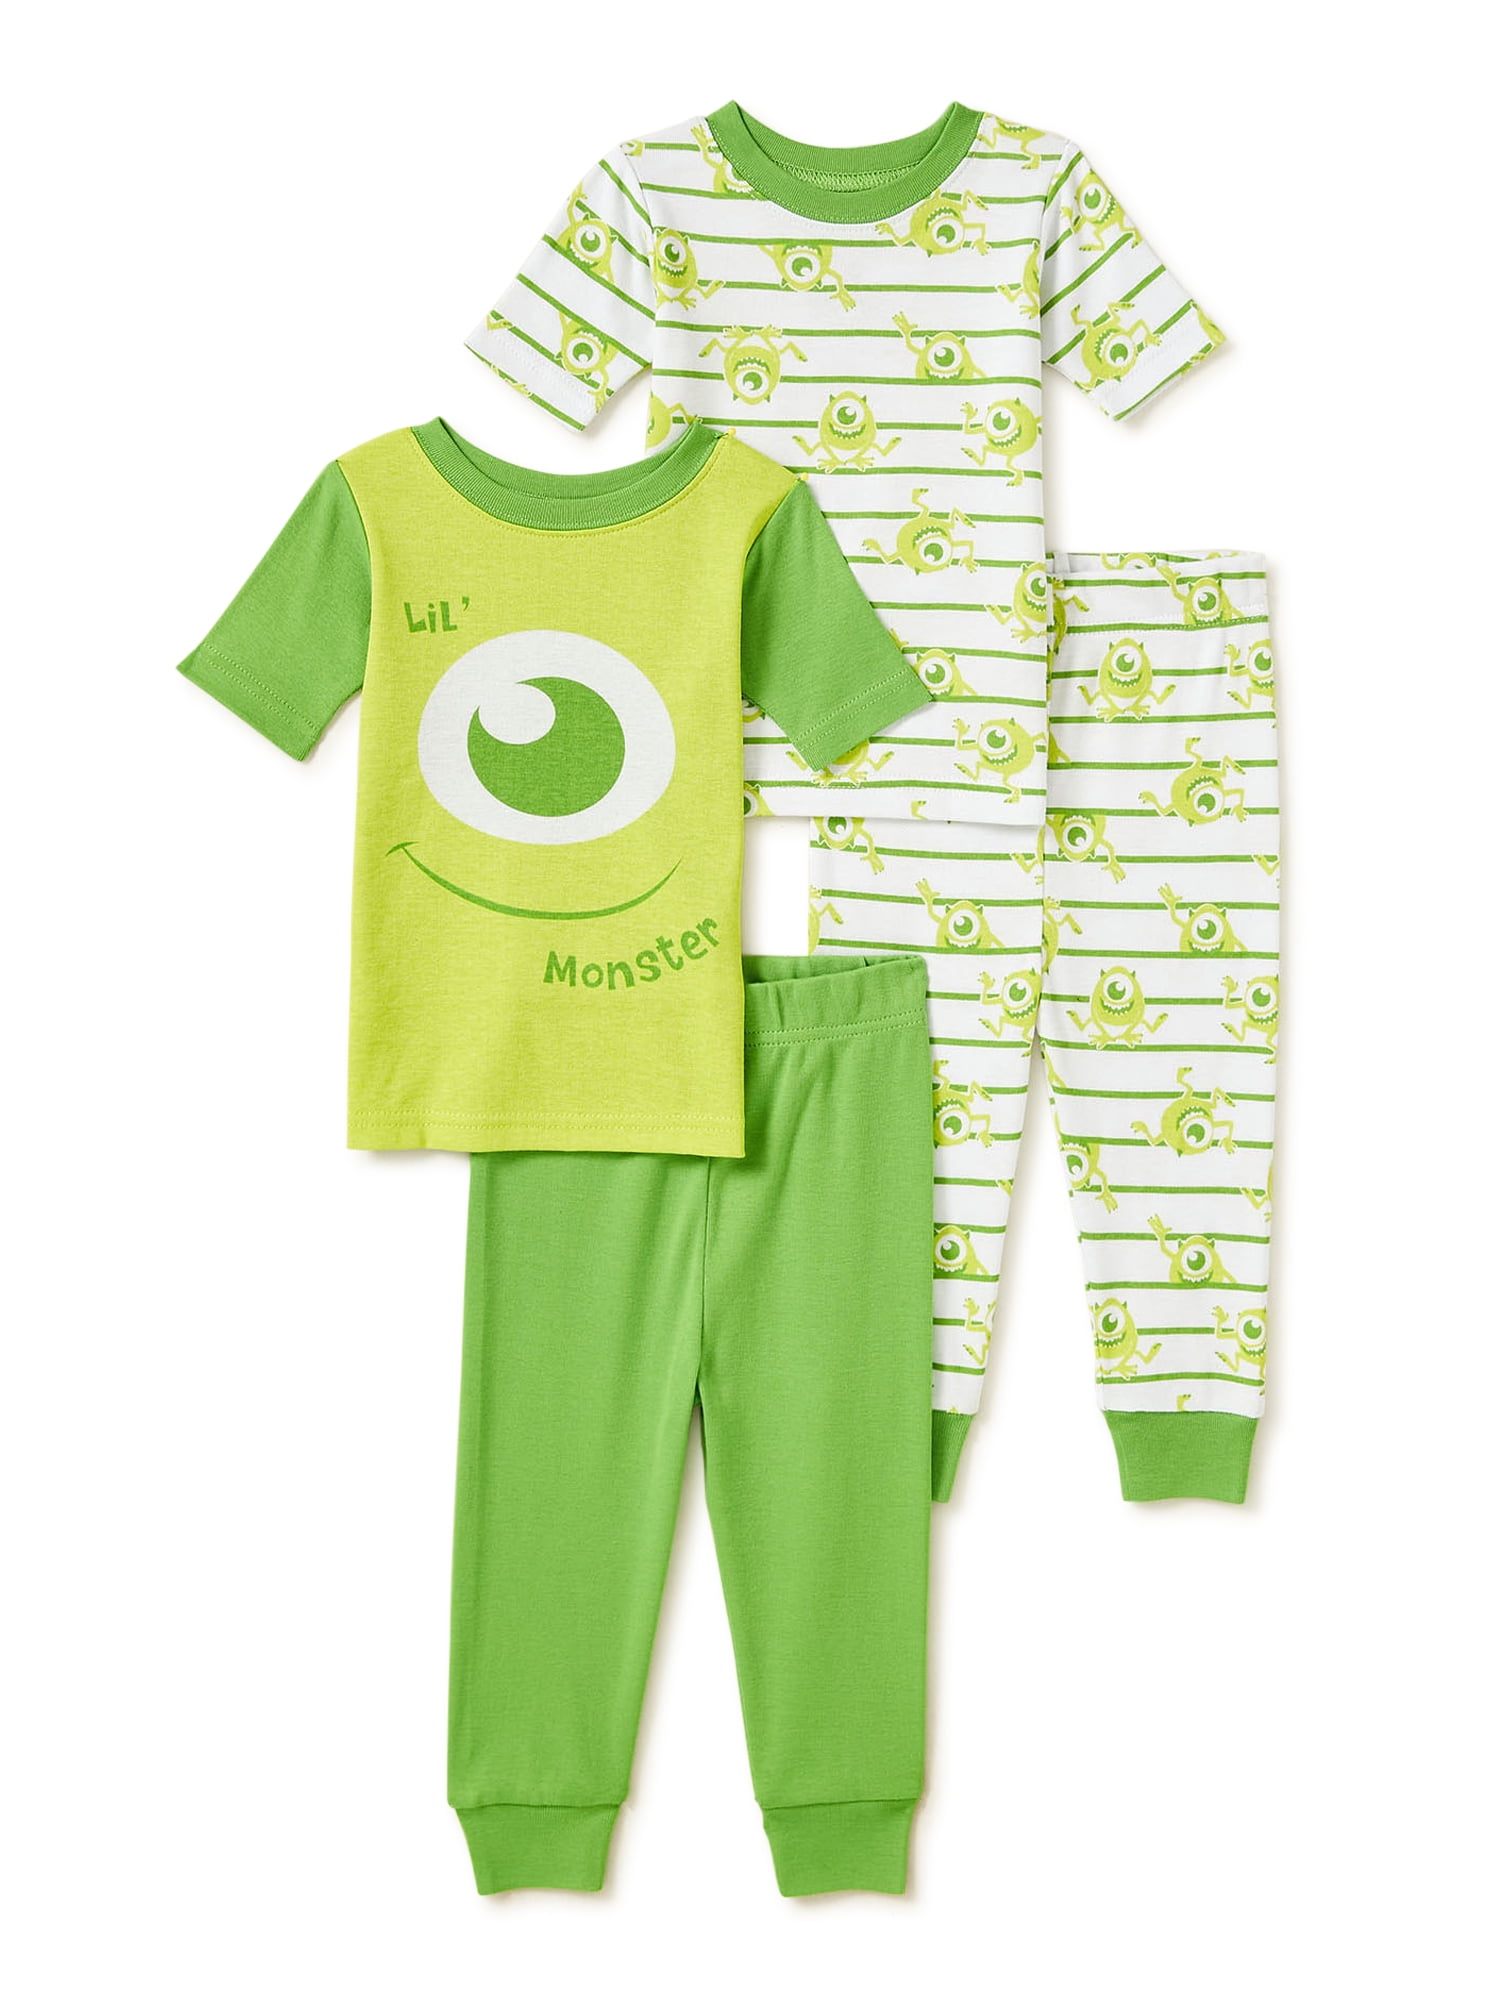 Disney Monsters Inc. Baby Boys 3 Pack Pyjamas. Age 6-9 months. BNWT